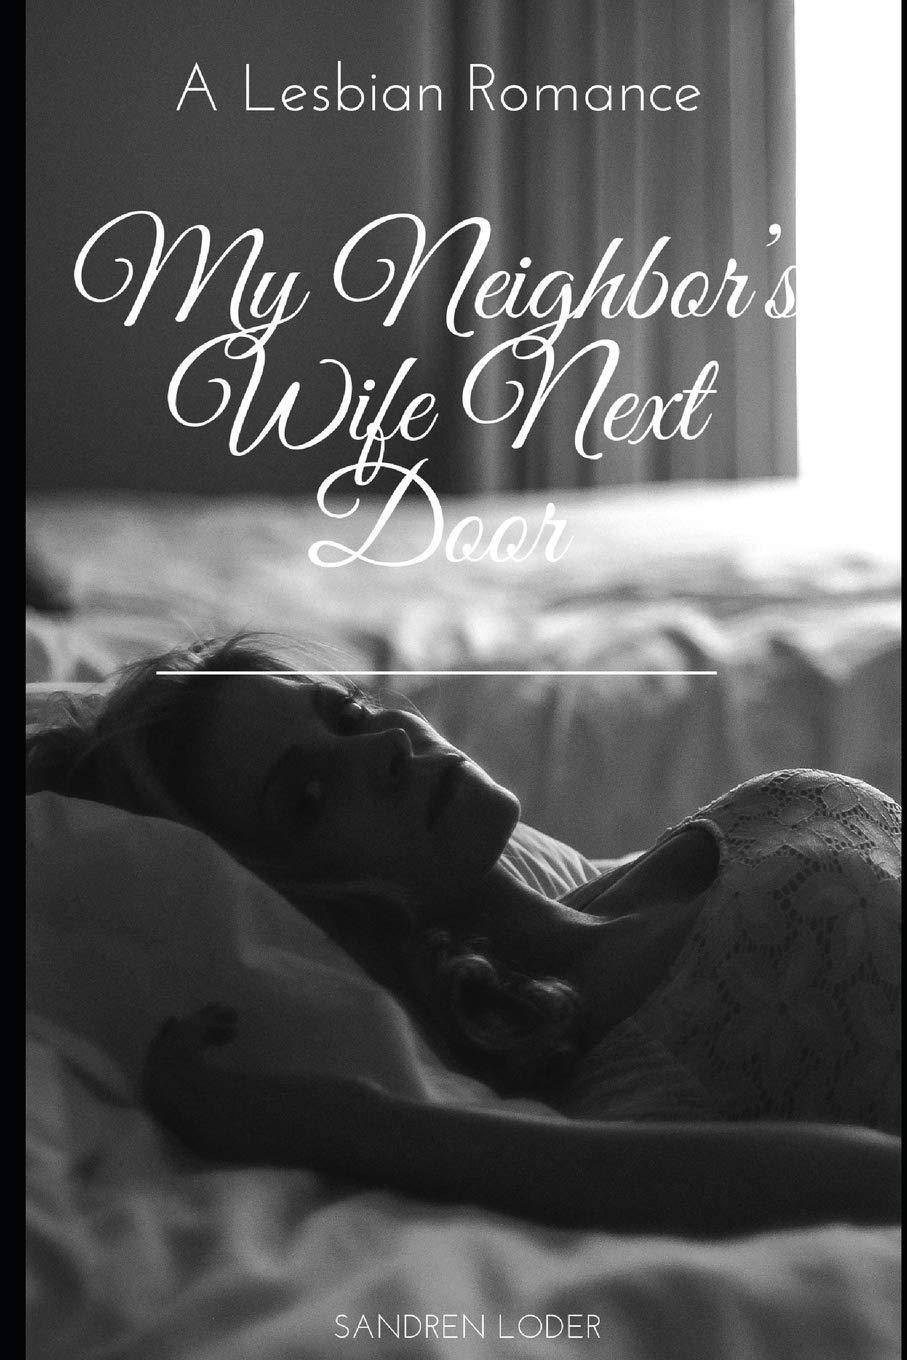 My Neighbor’s Wife Next Door - SureShot Books Publishing LLC